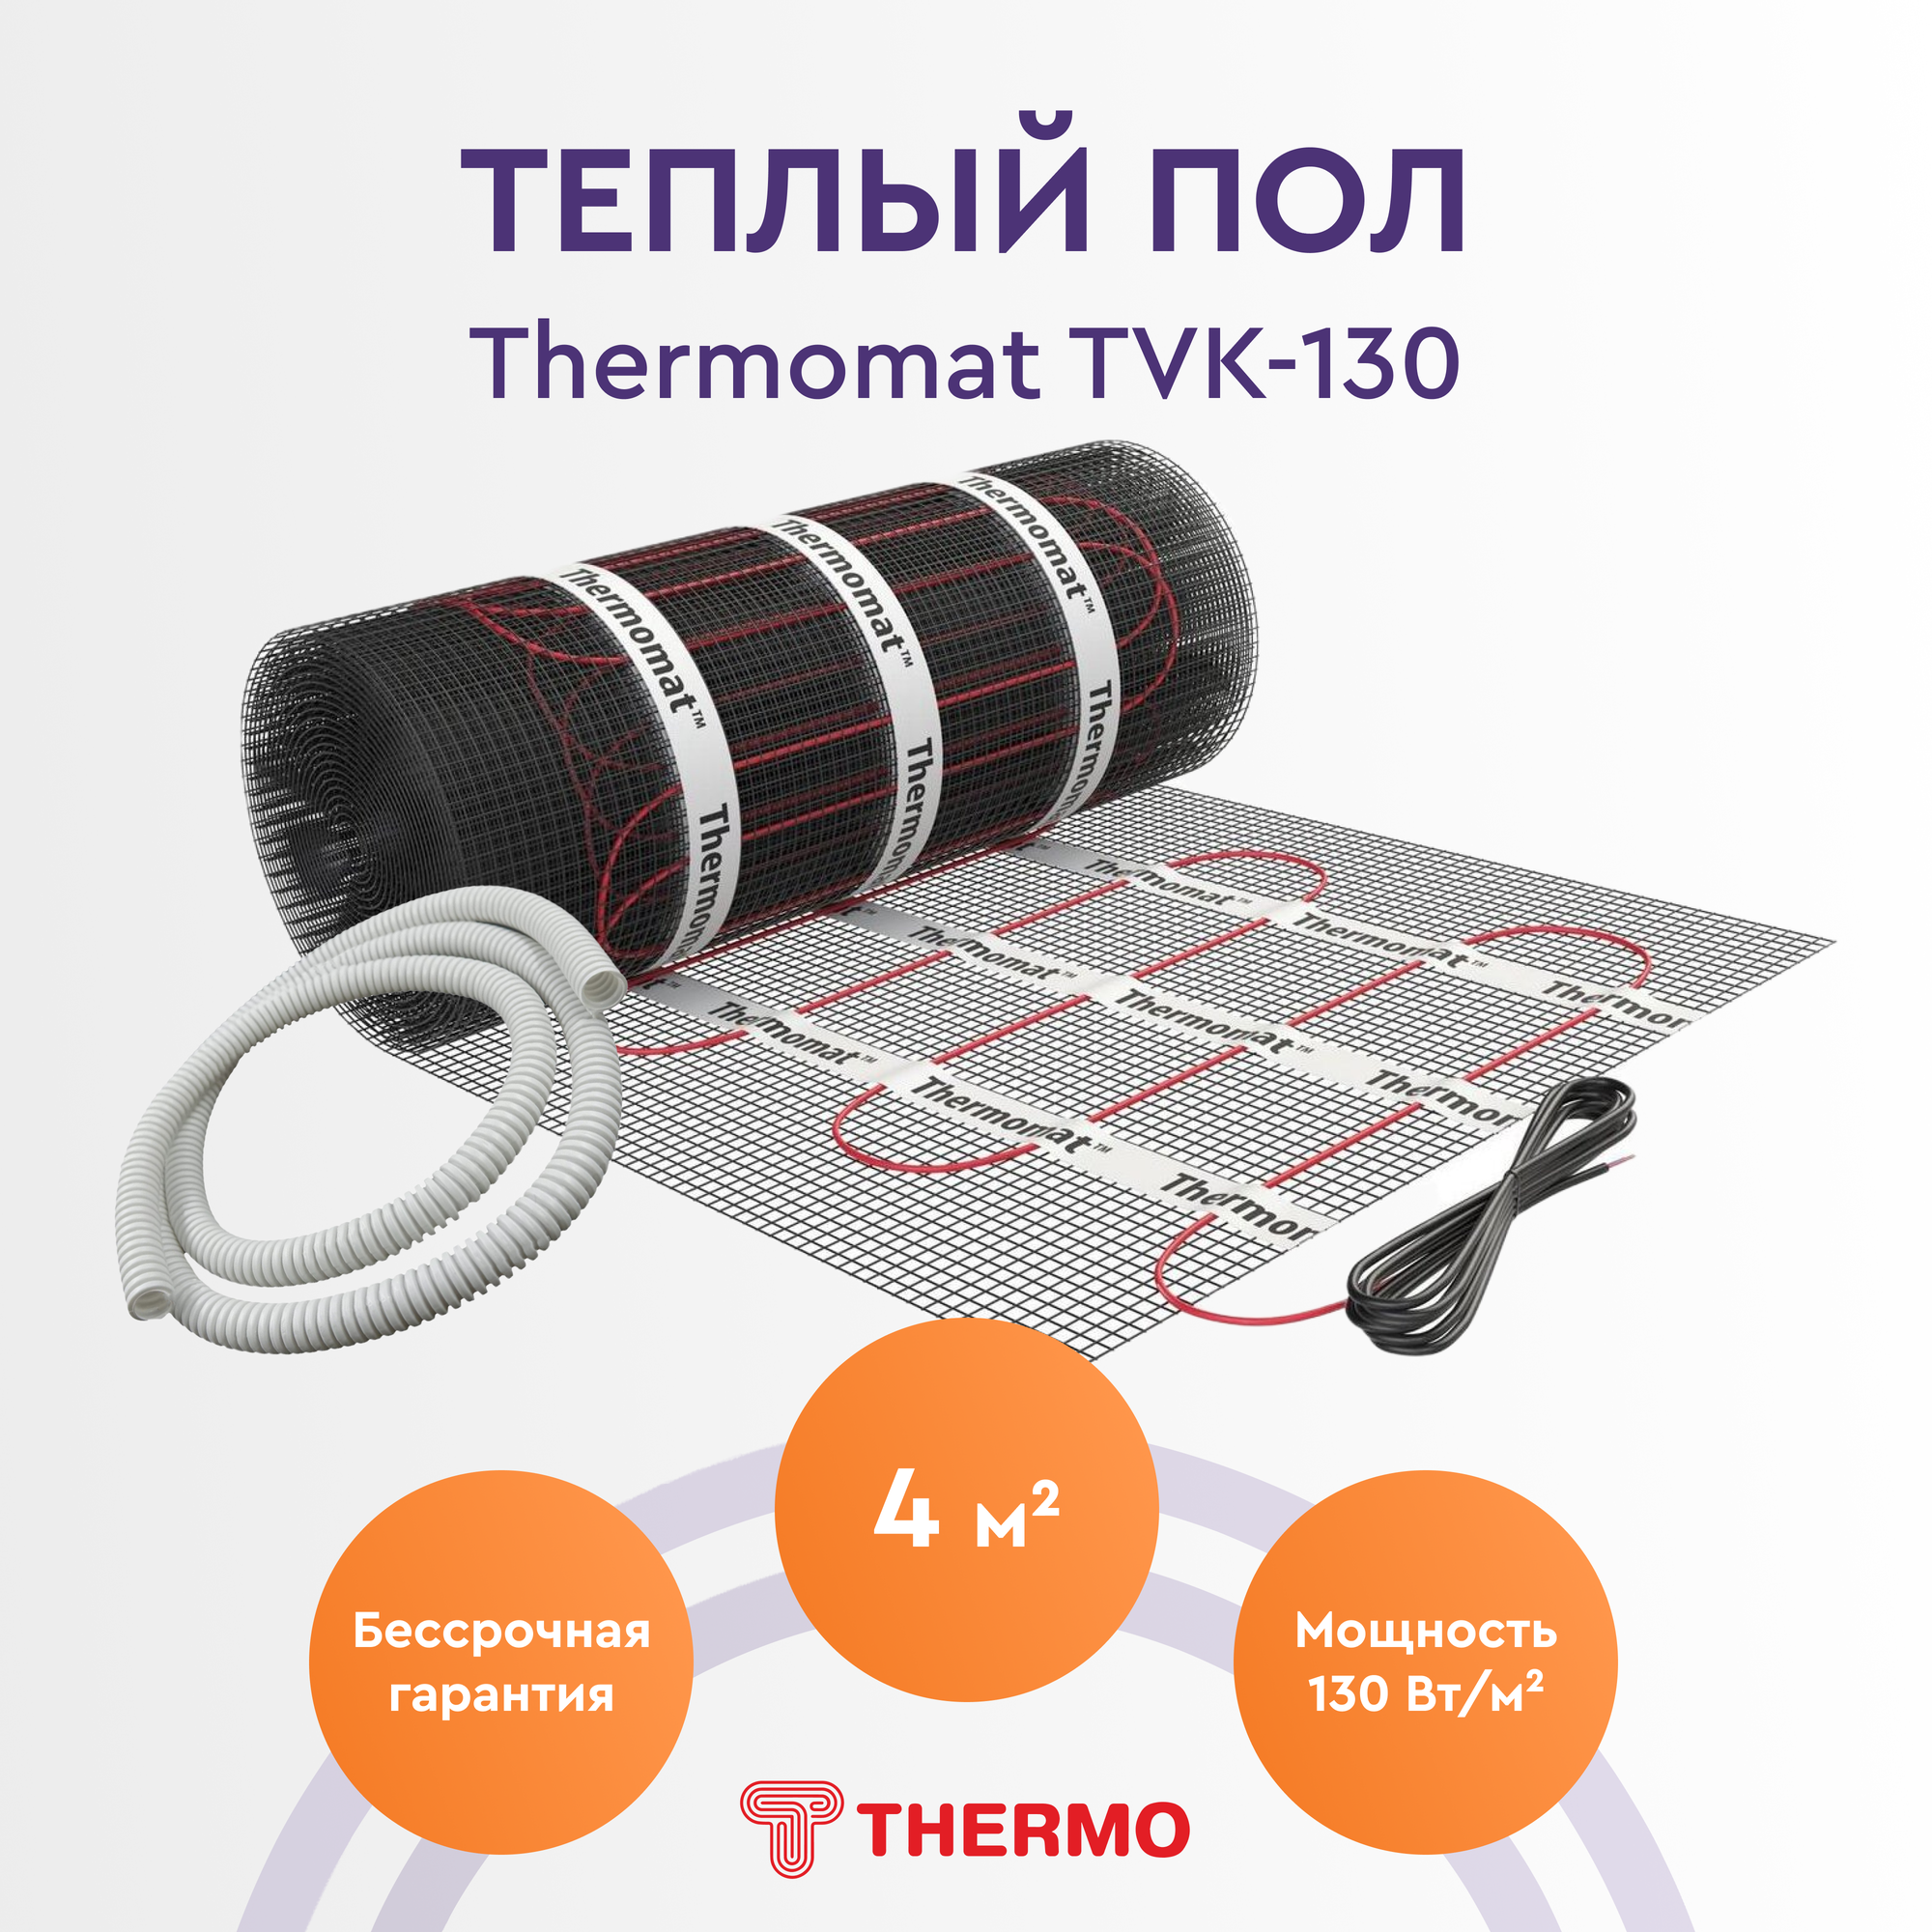 Теплый пол Thermo Thermomat TVK-130 4м. кв.